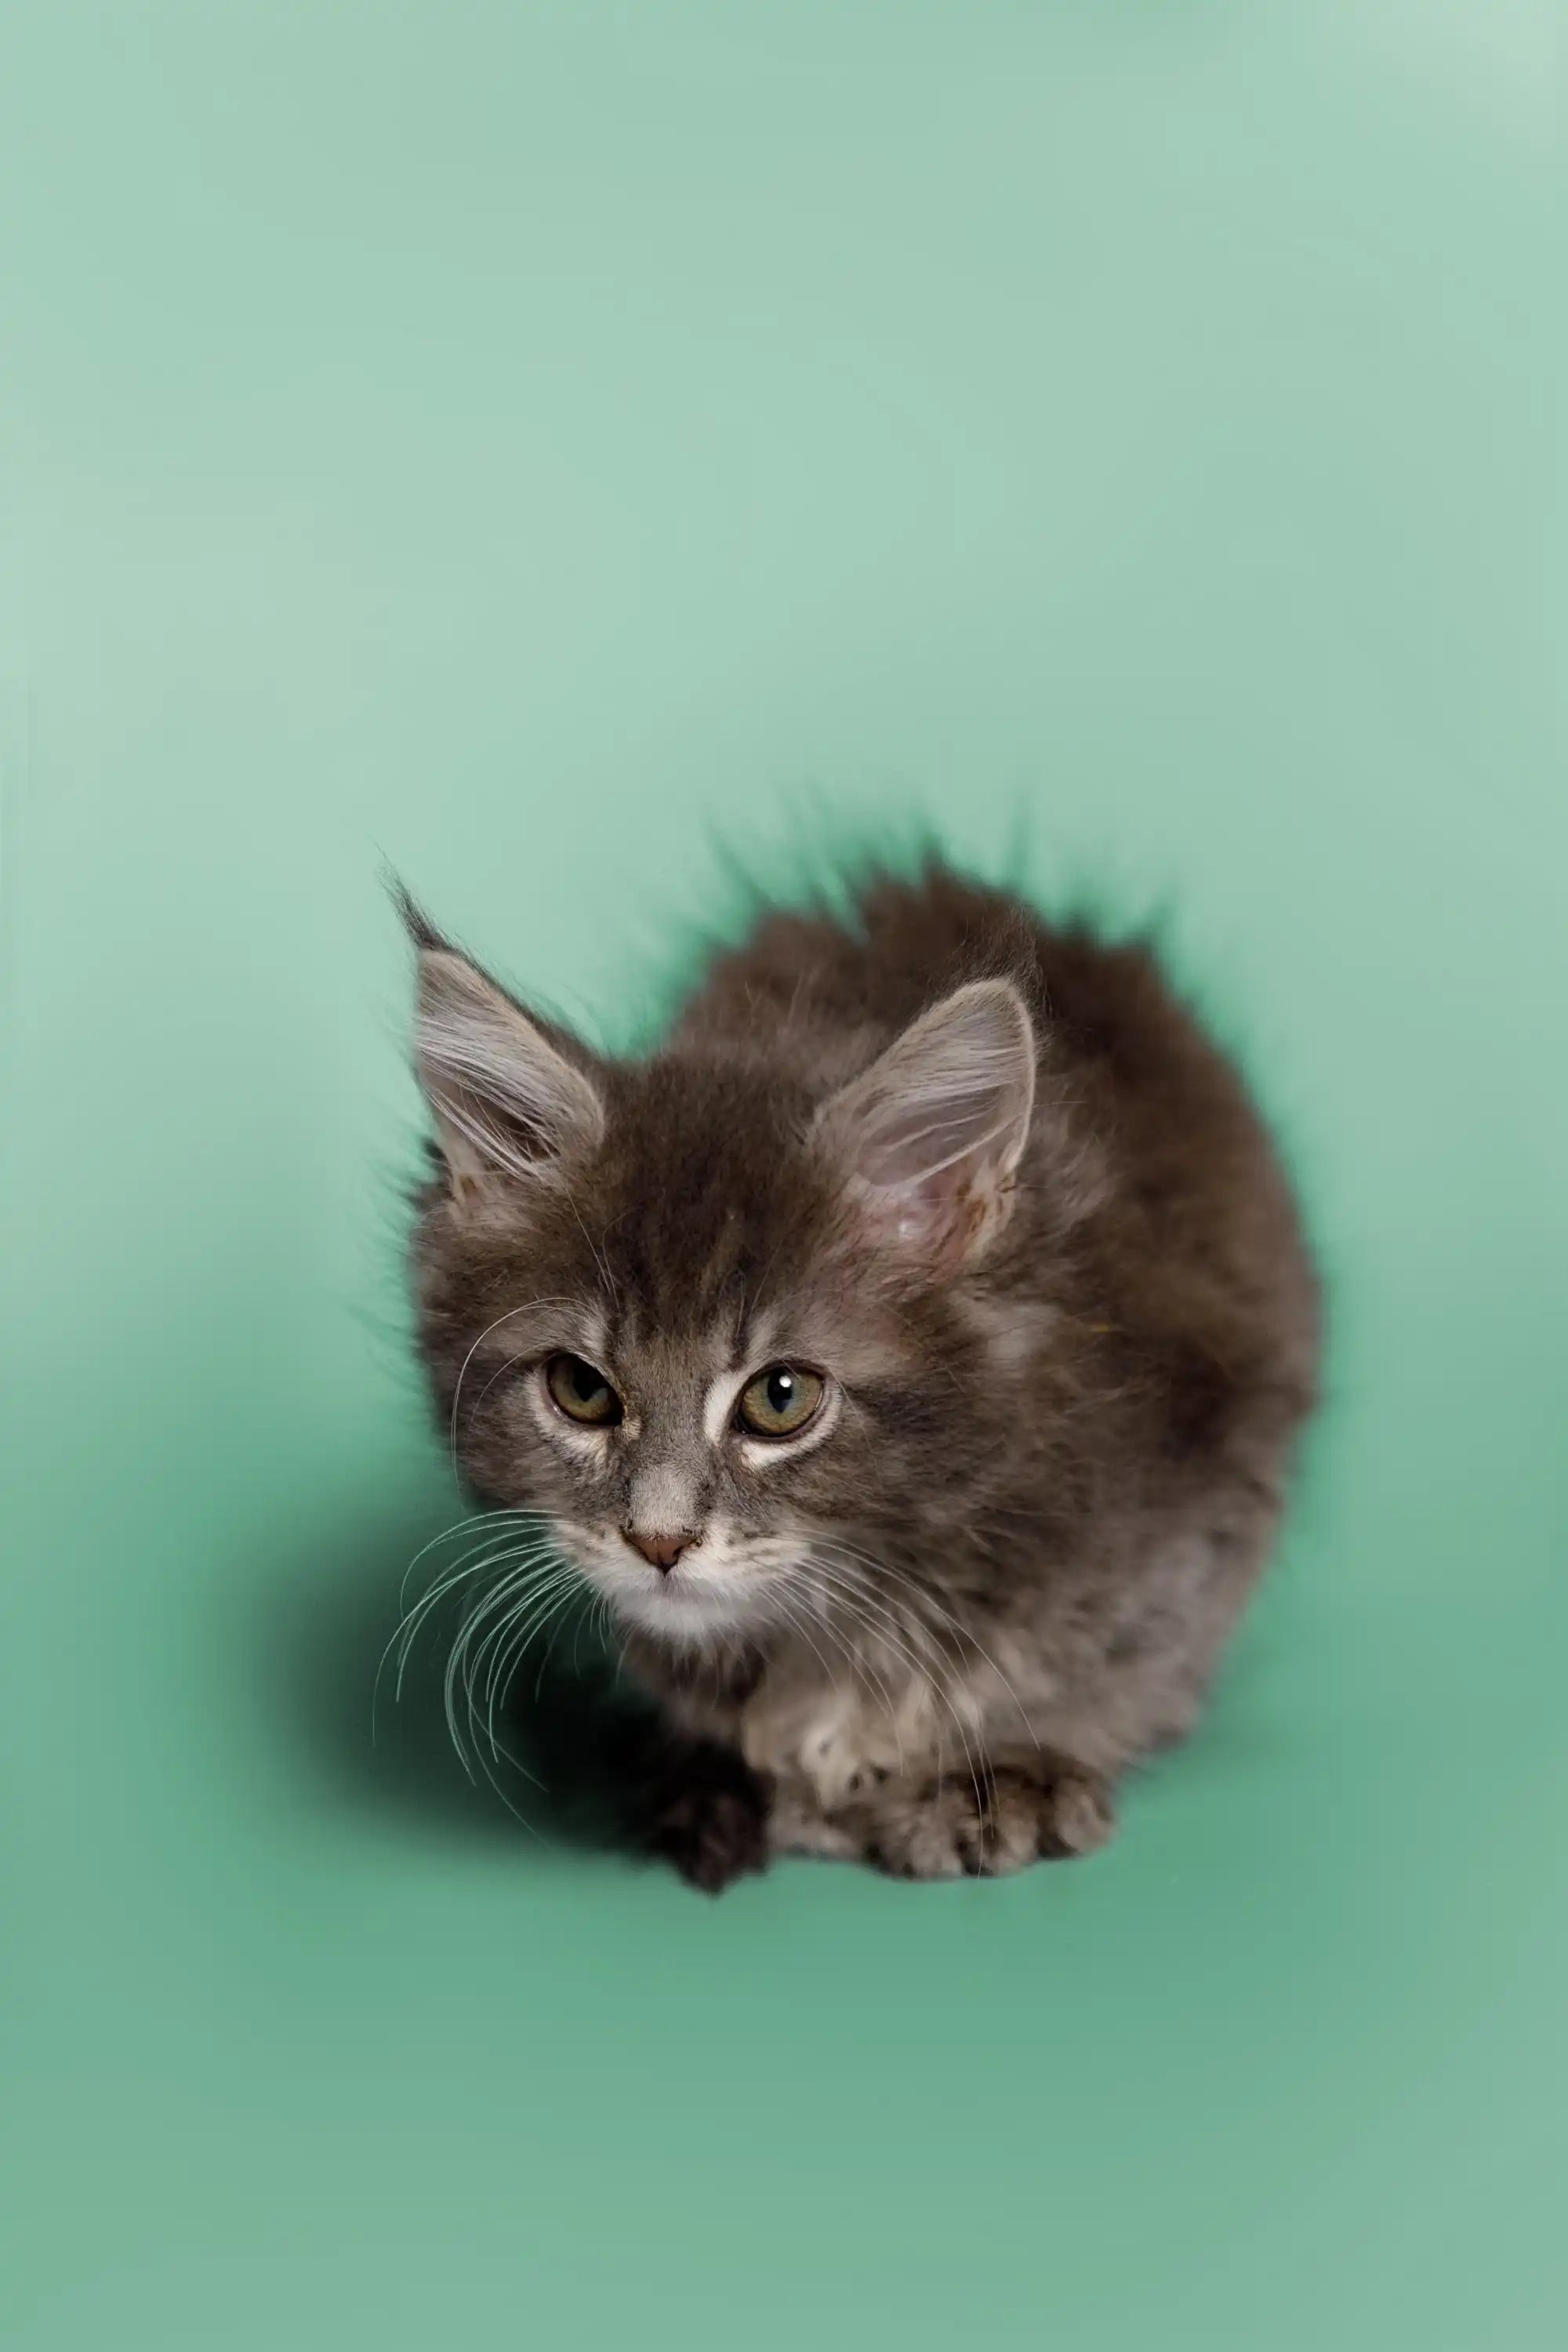 Maine Coon Kittens for Sale Wicky | Kitten